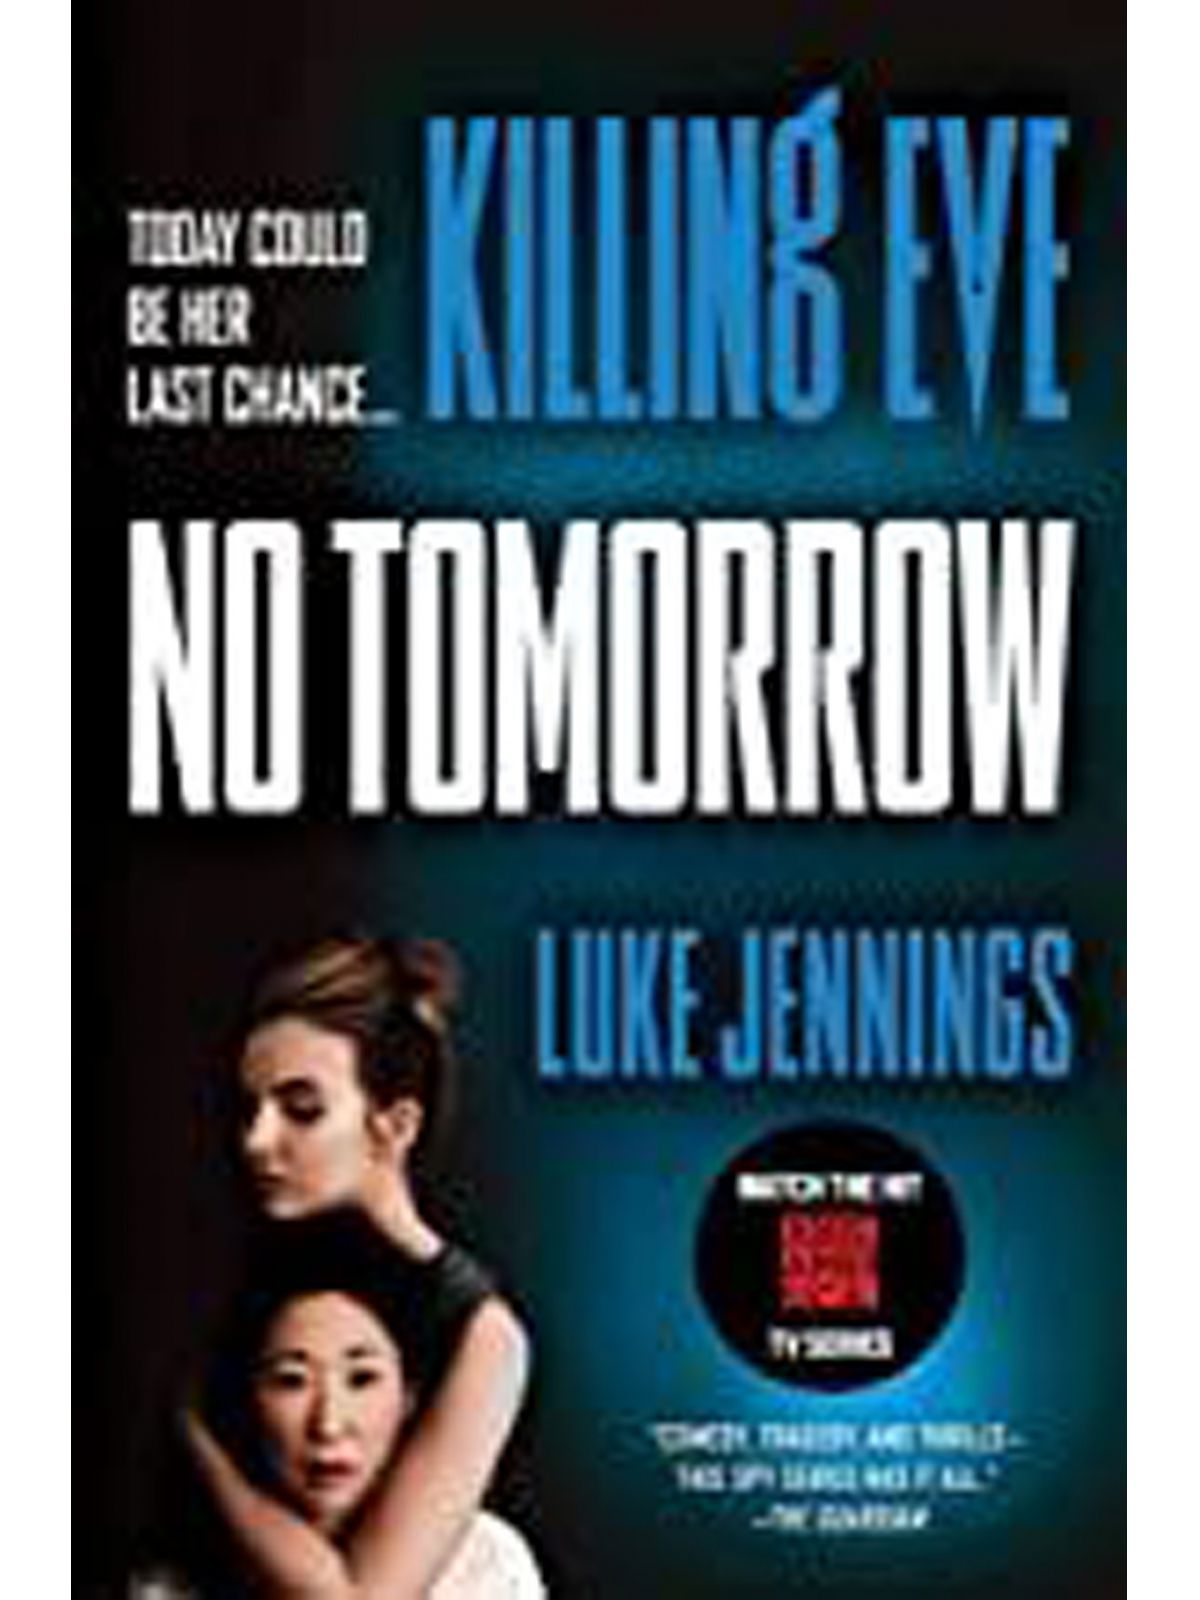 NO TOMORROW - KILLING EVE #2 JENNINGS, LUKE Купить Книгу на Английском